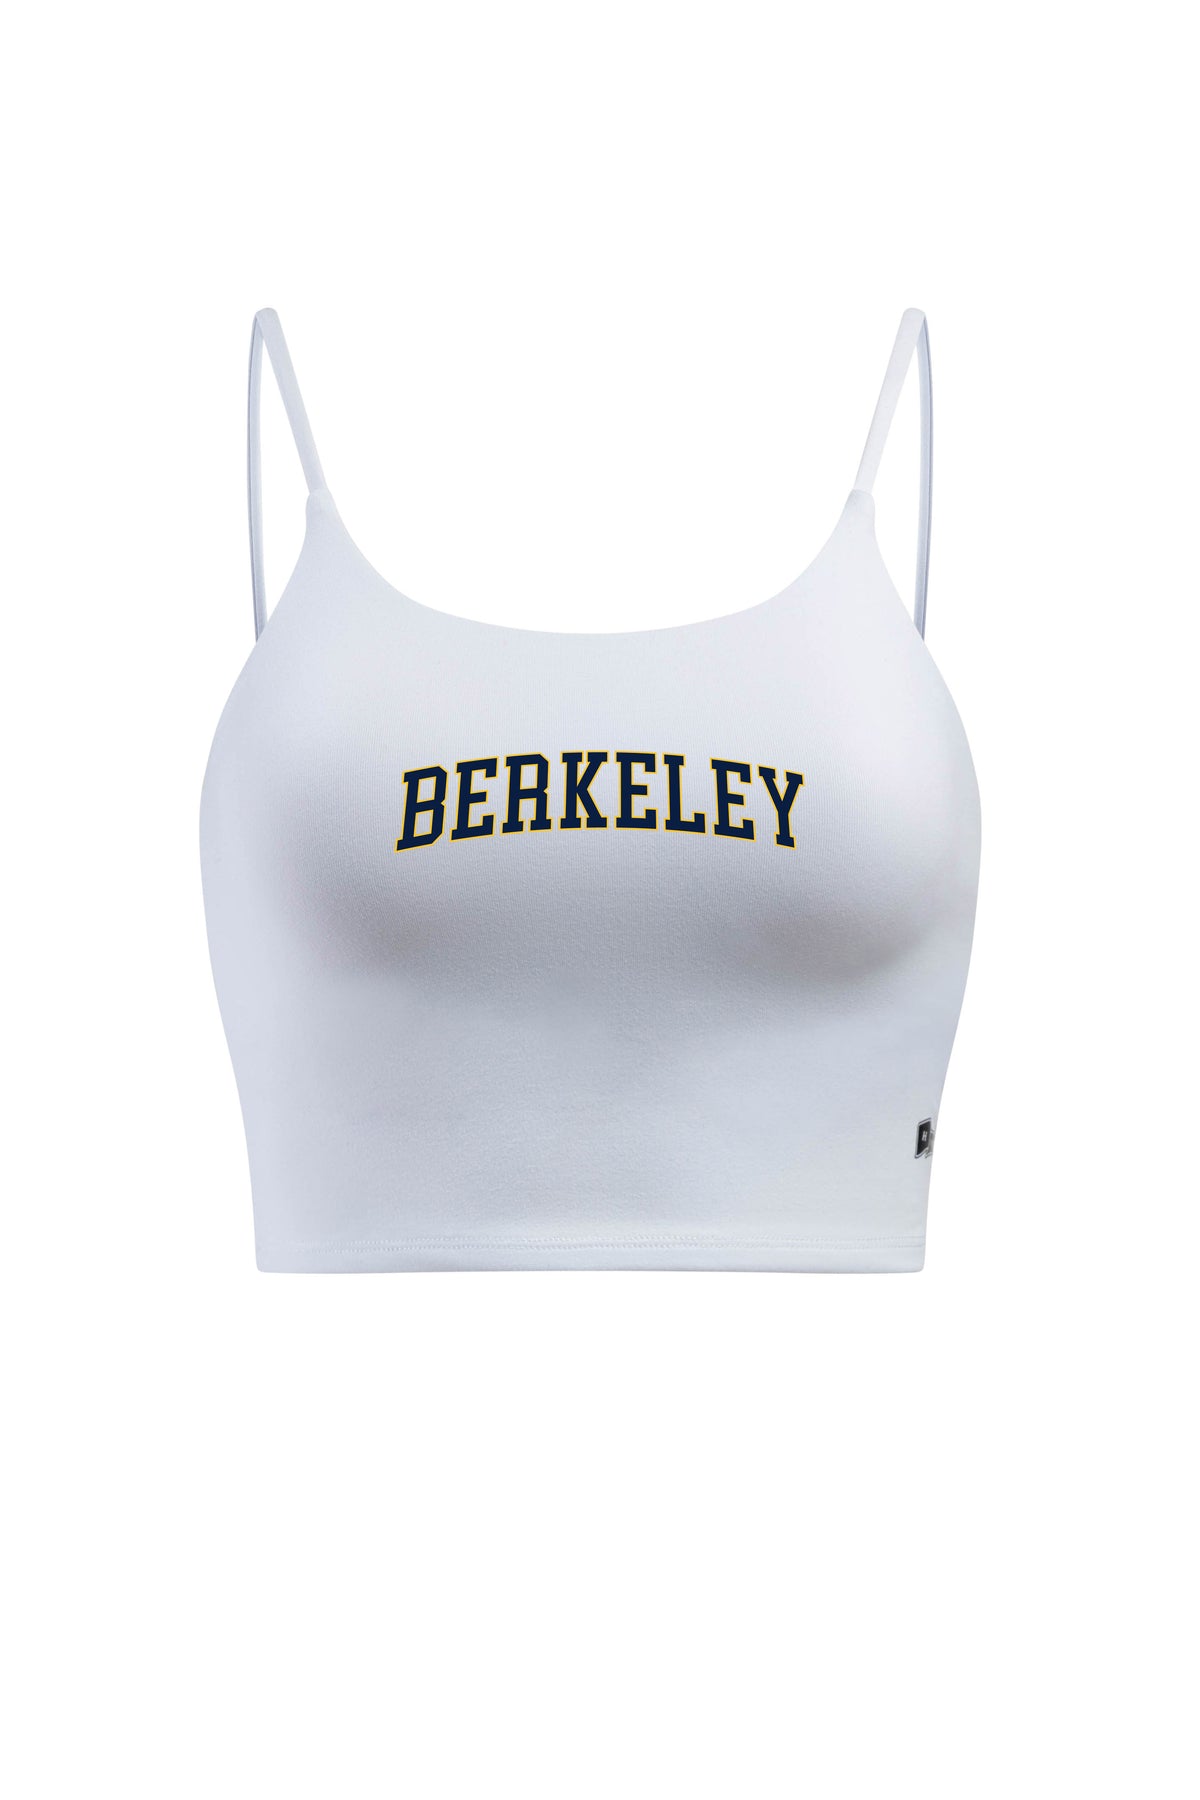 University of California Berkeley Bra Tank Top